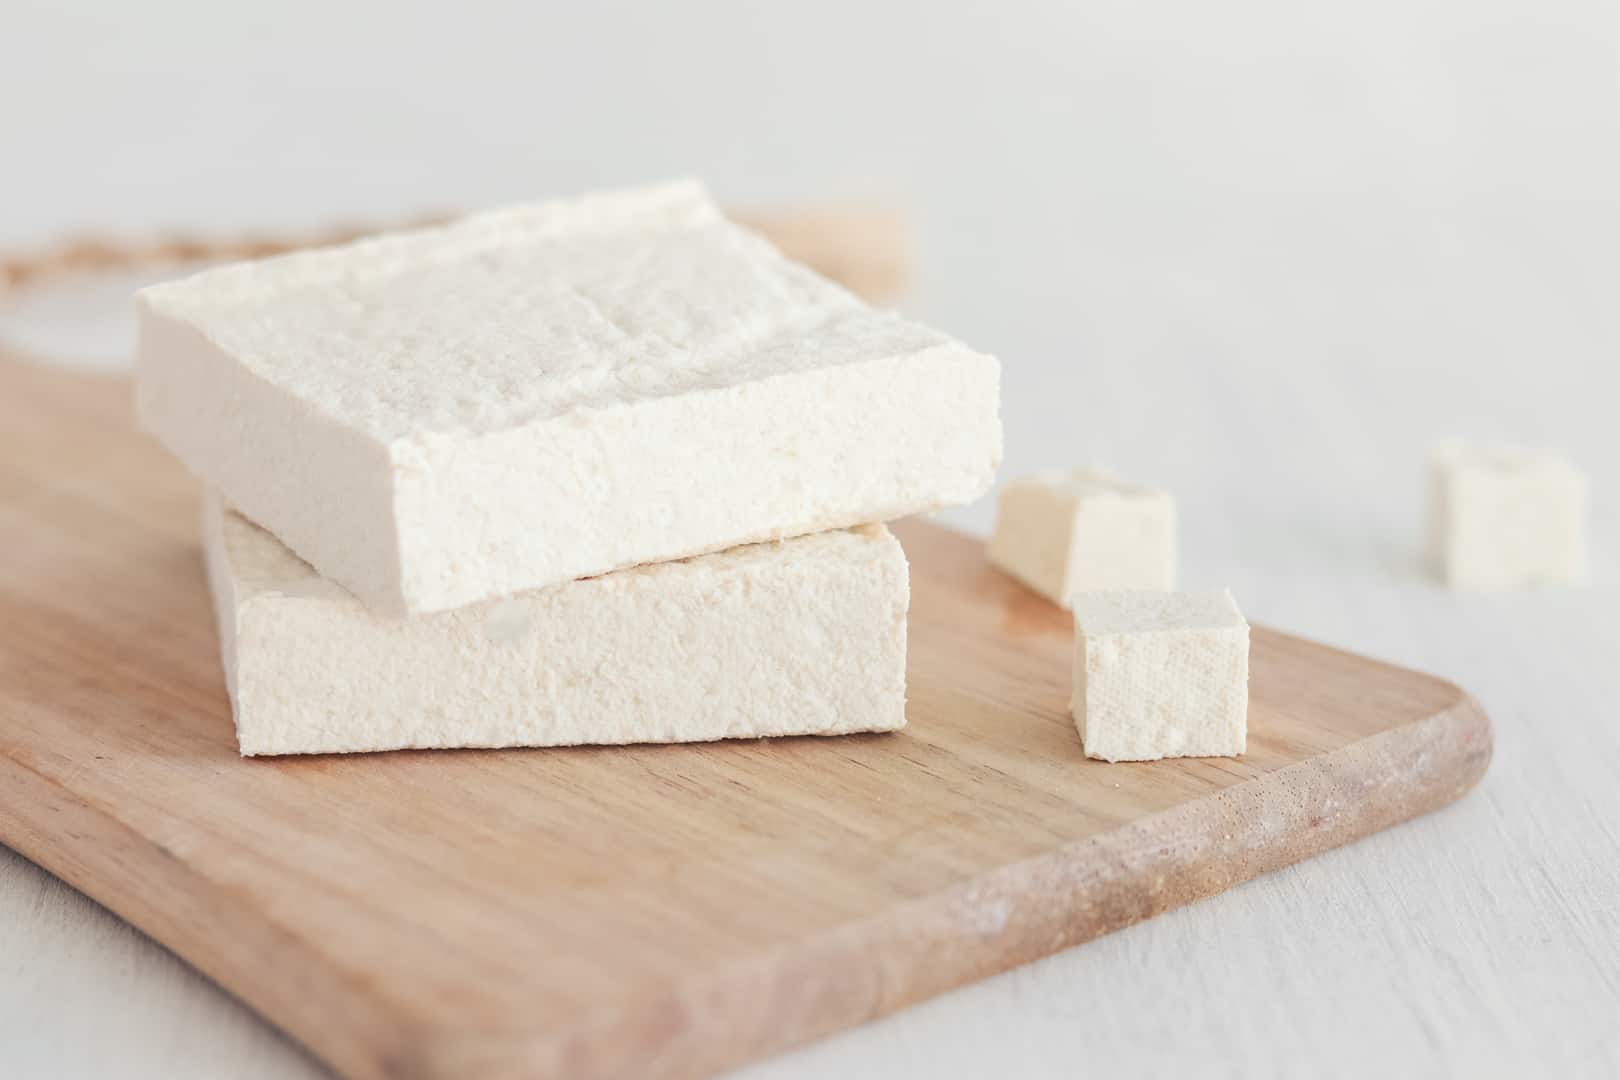 How to make tofu frrom scratch